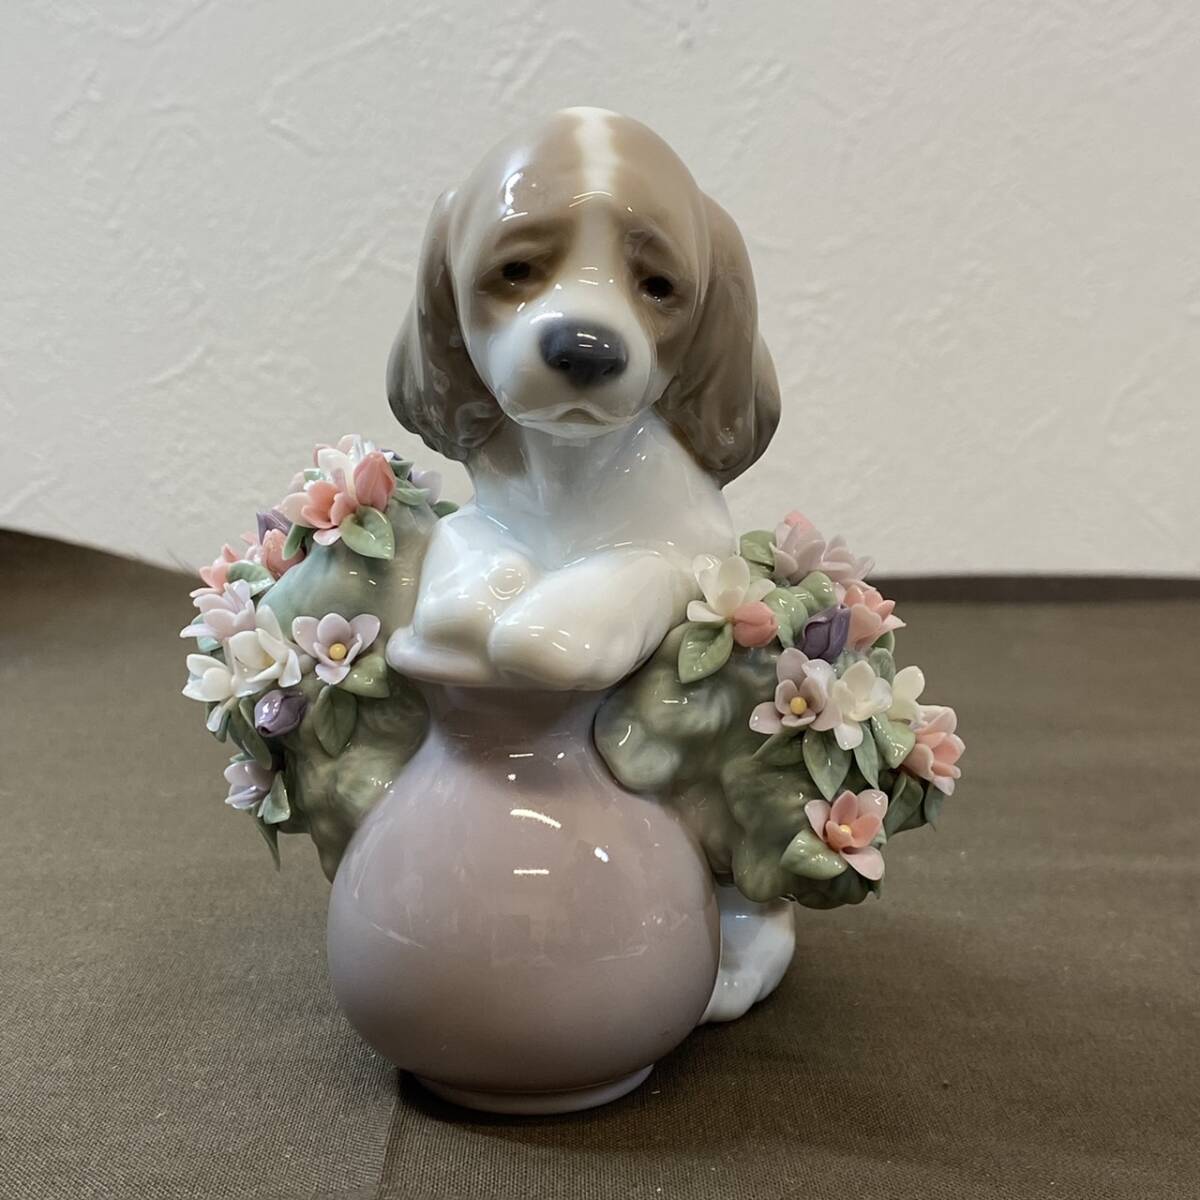 【MH-7239】中古品 LLADRO リヤドロ お花が大好き 6574 犬 陶器 フィギュリン 西洋陶器 人形 西洋磁器 置物 インテリアの画像1